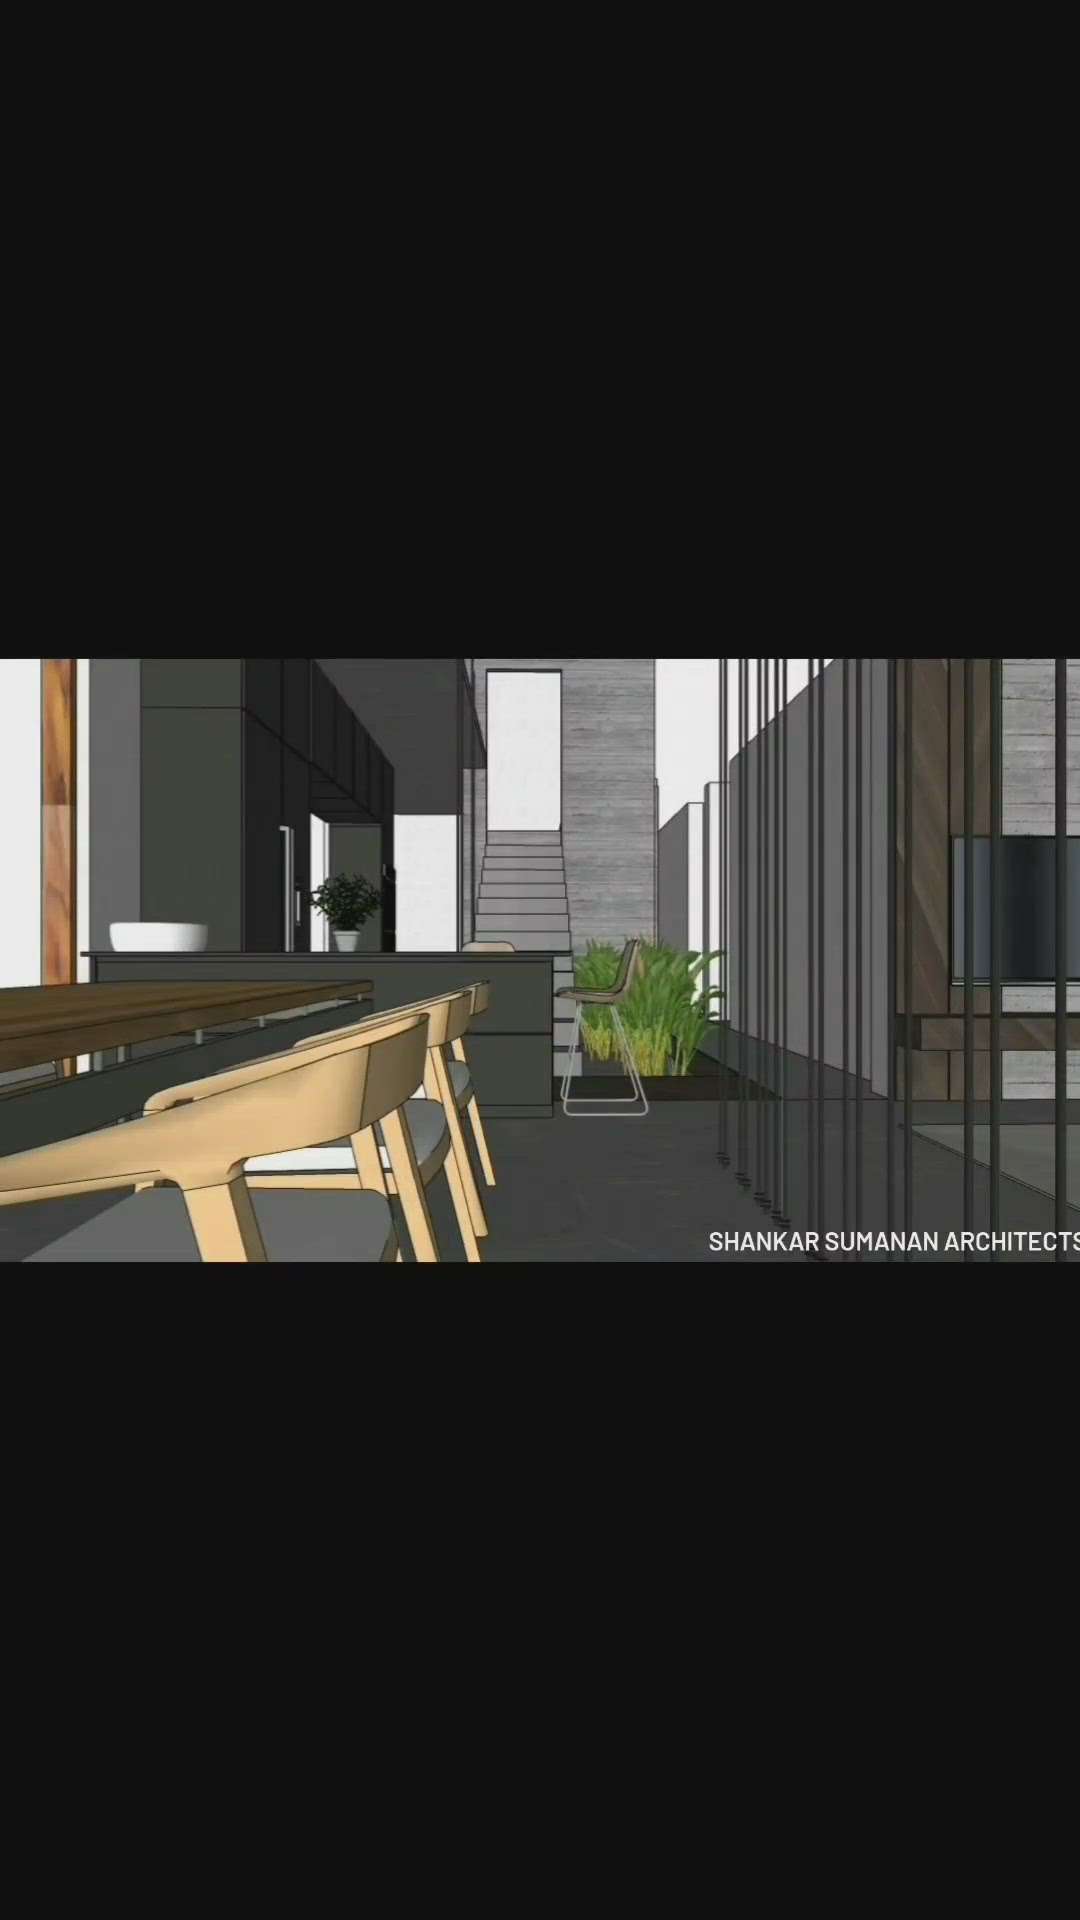 Interior design minimalist architecture 
Design @shankar_sumanan_architects
#architecture #Interior #keraladesigners #shankarsumananarchitects #2023 #design #minimalist #tips #newdesignhomes